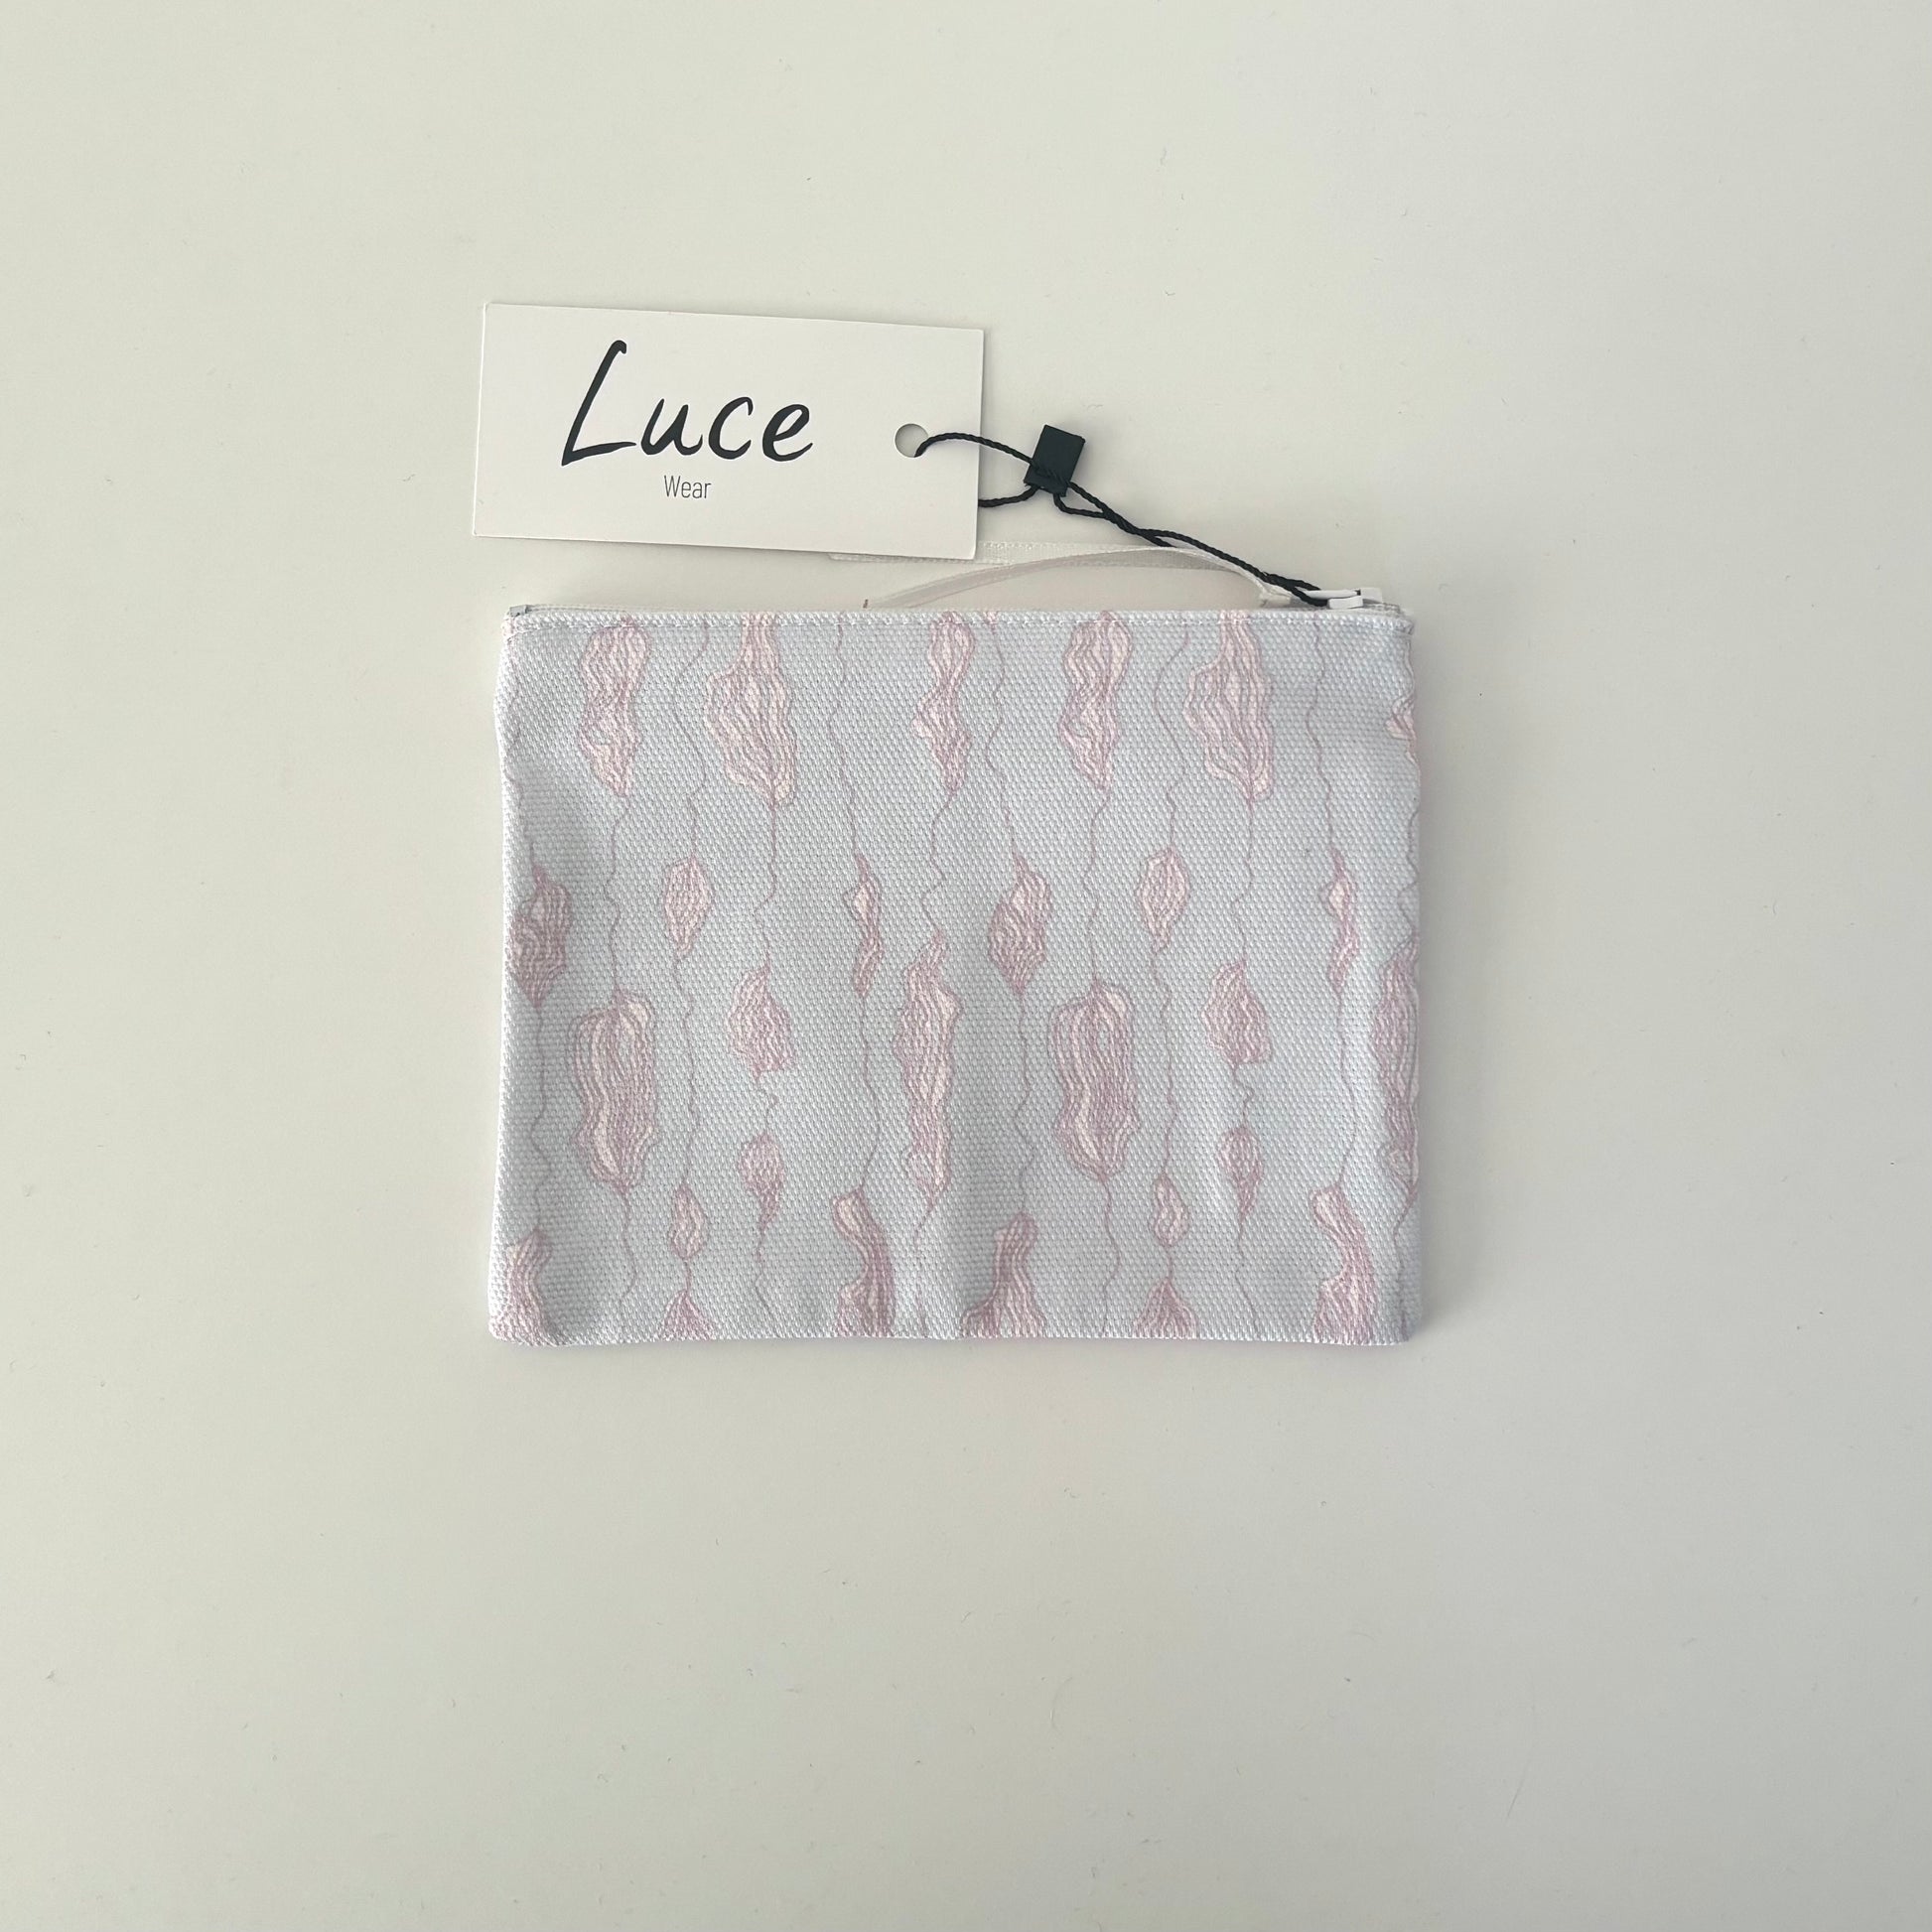 lucewear: petit pochette en tissu bleu